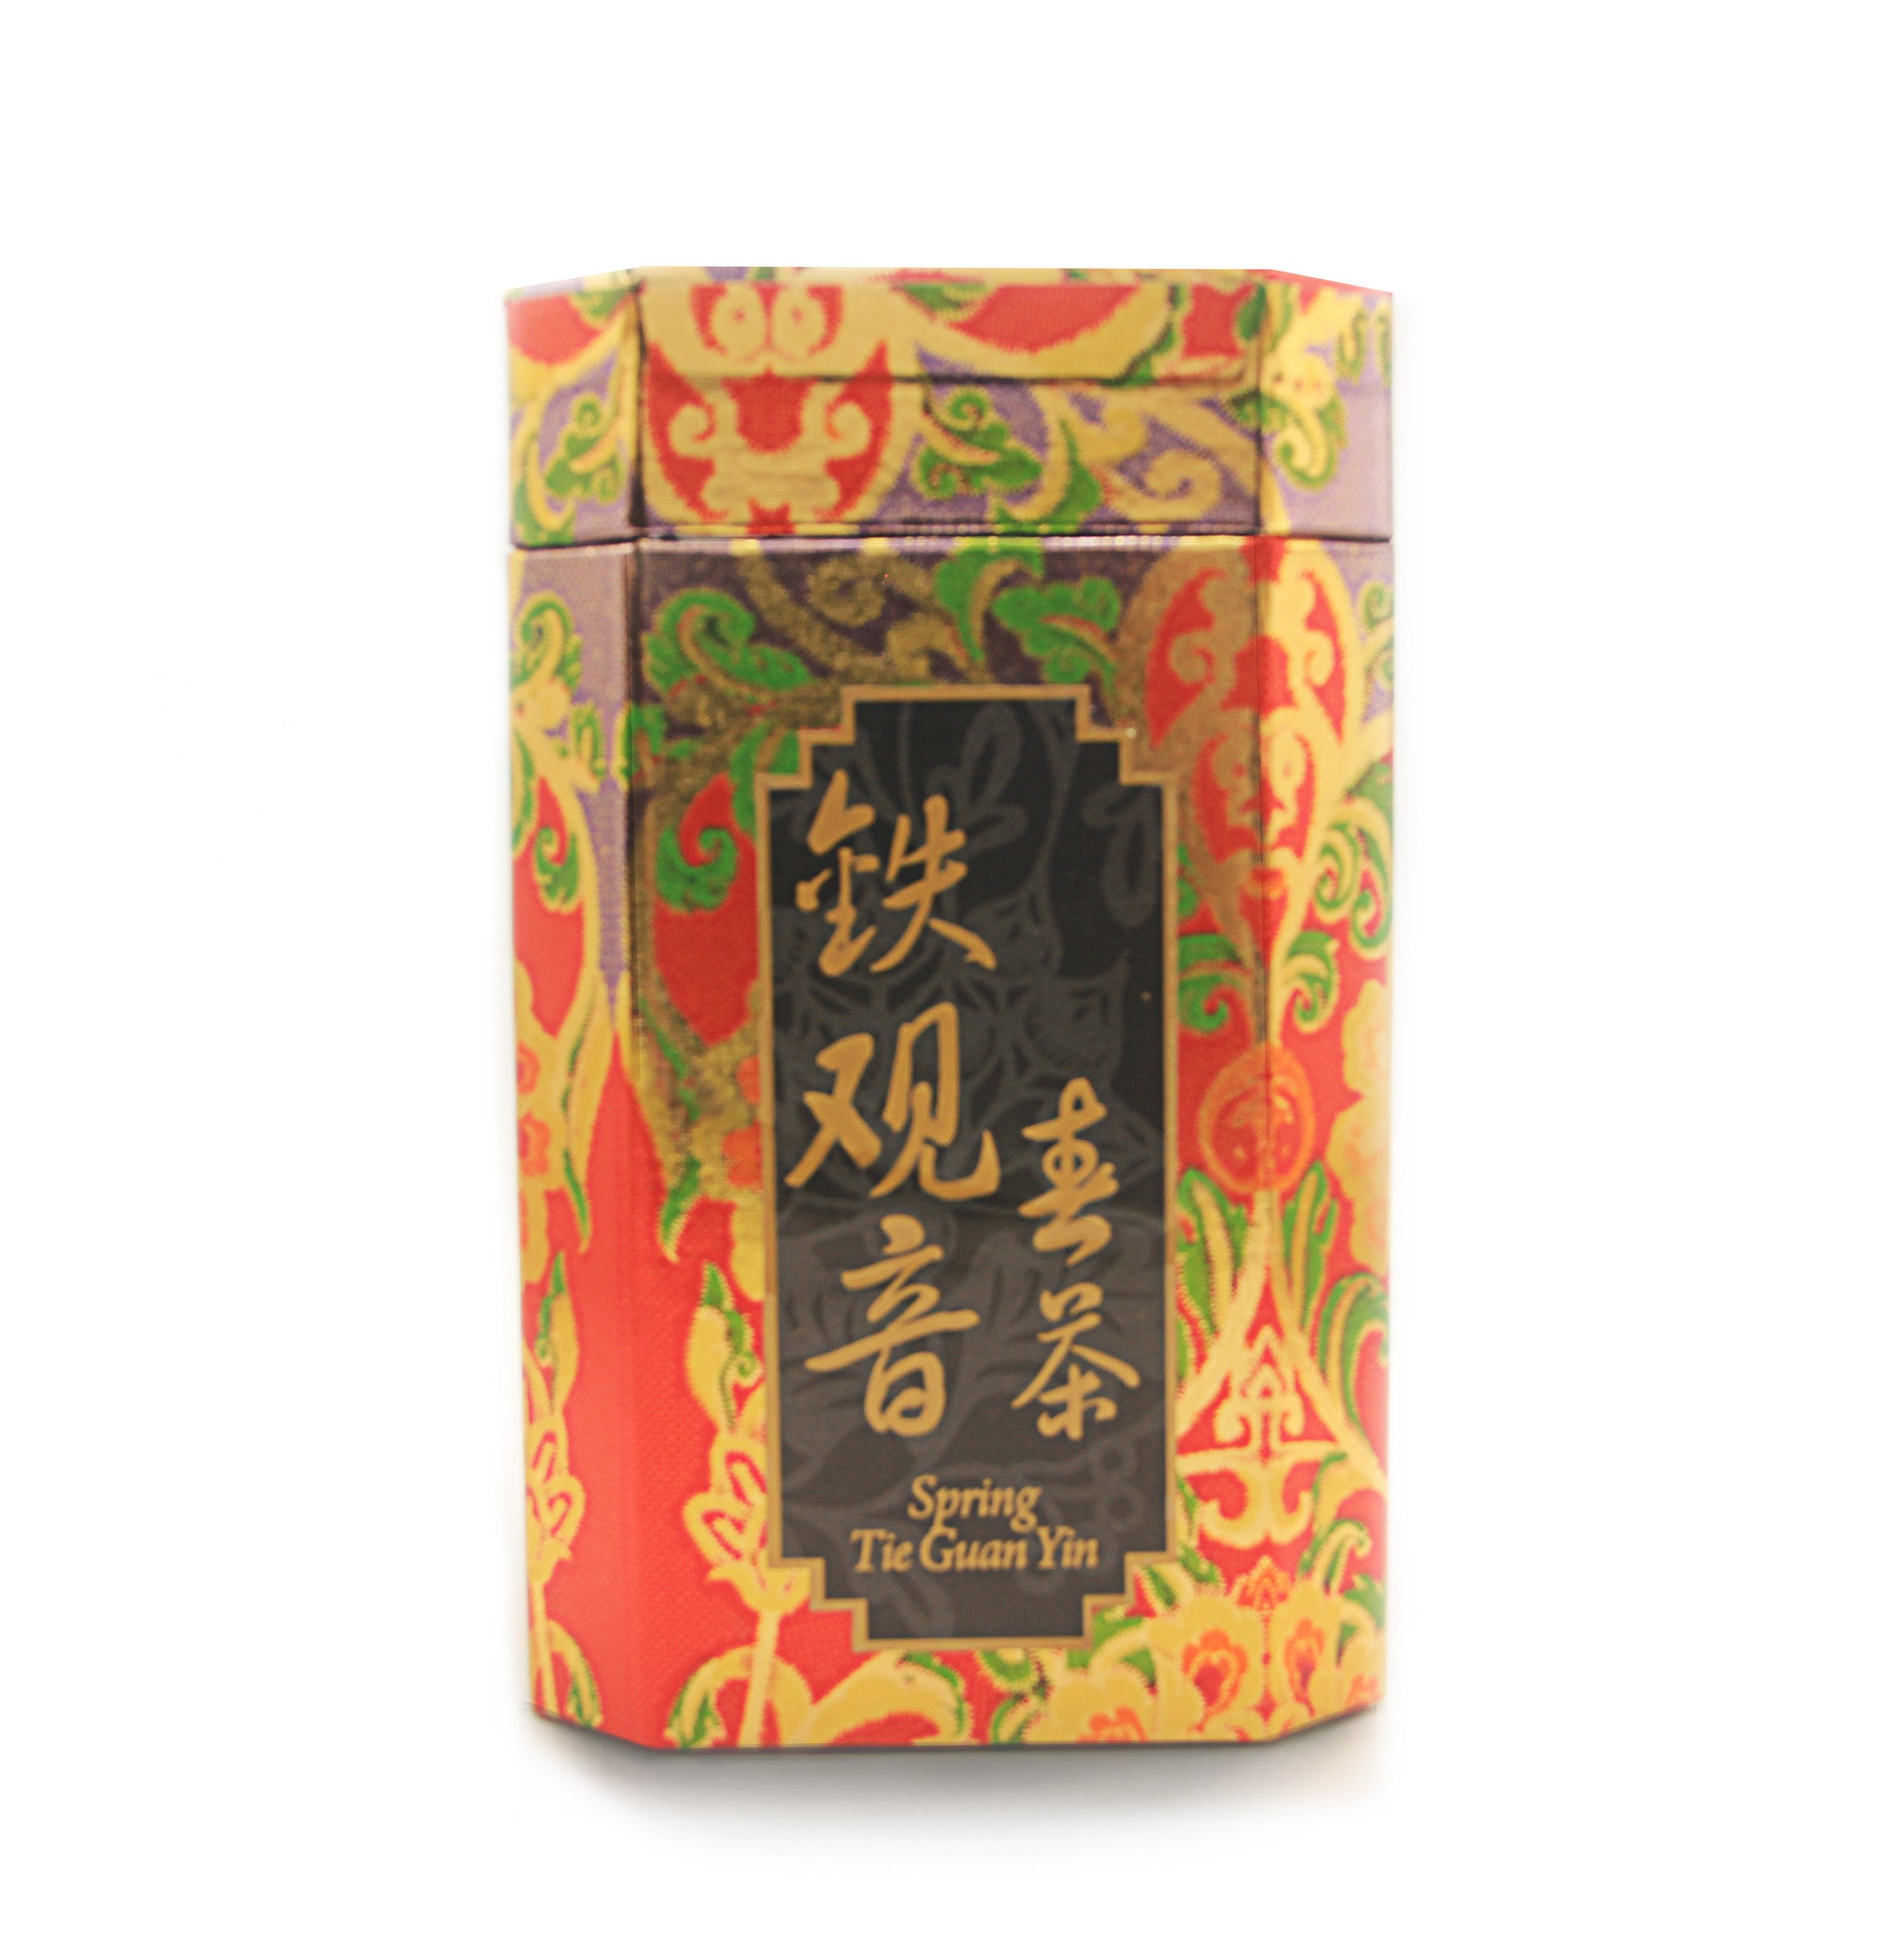 Spring Tie Guan Yin (铁观音春茶）